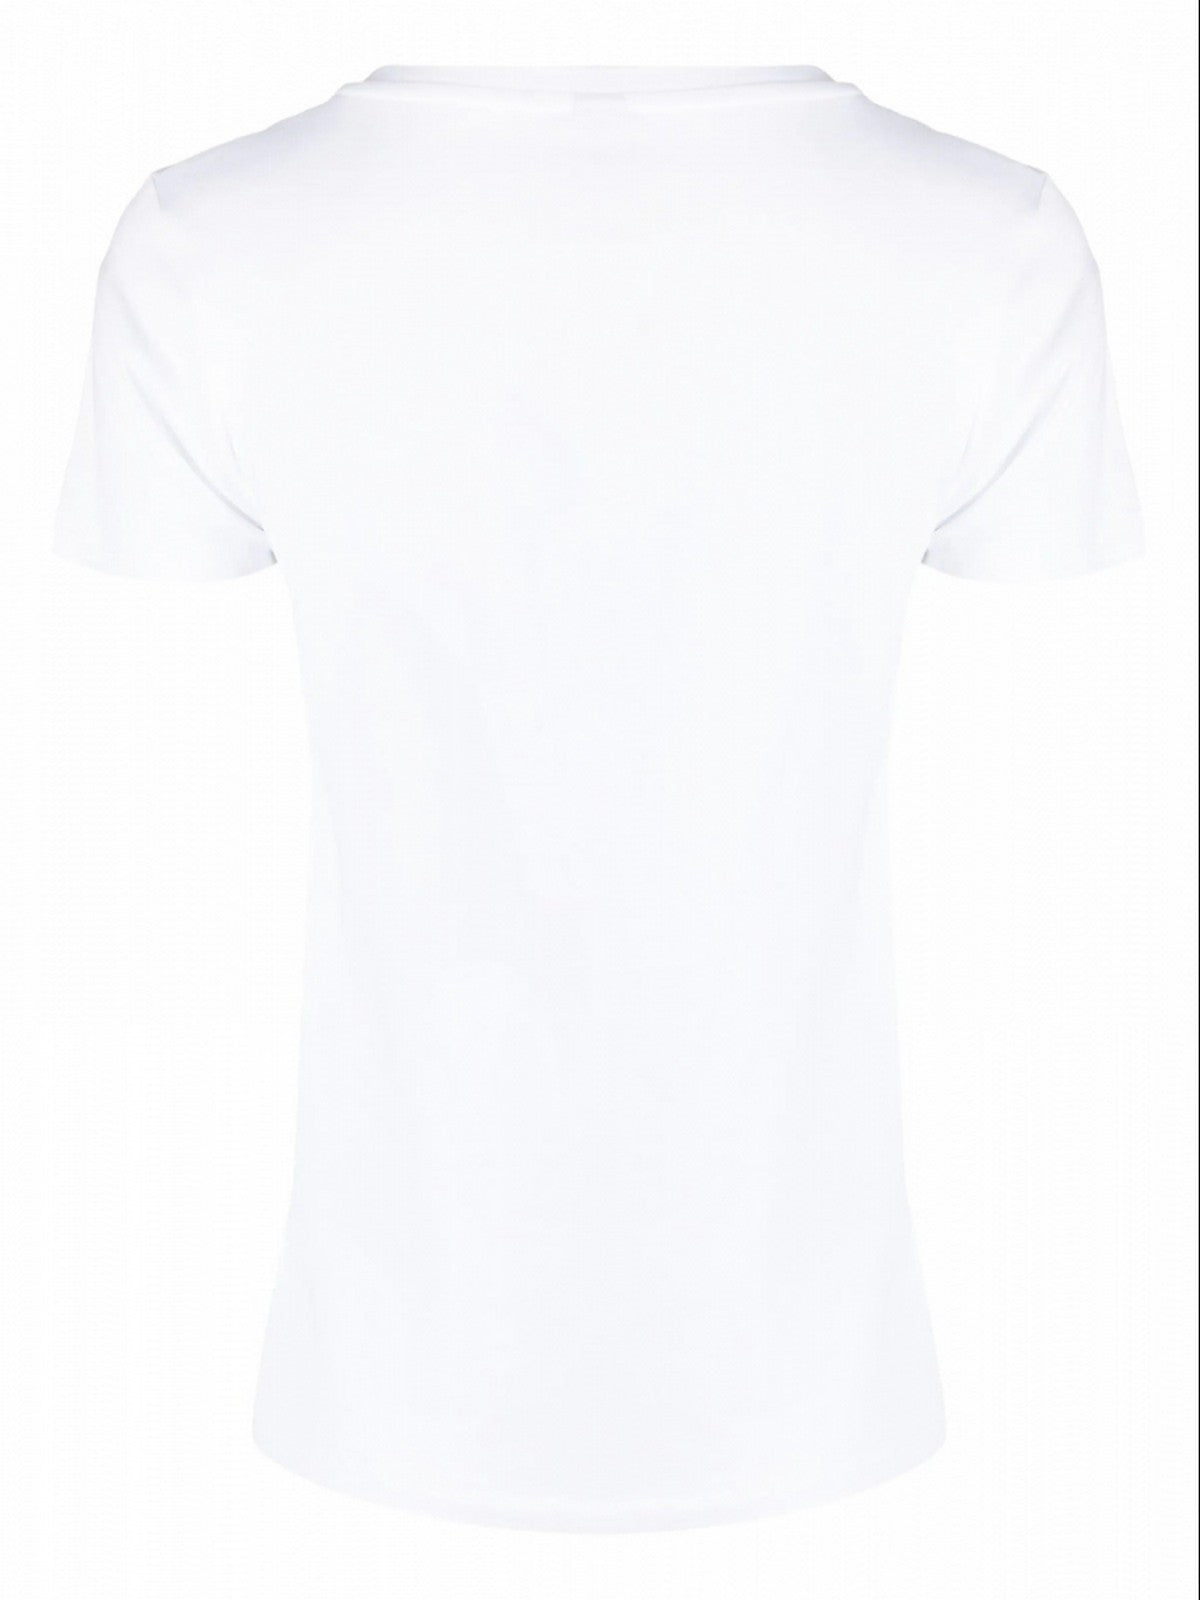 MOSCHINO UNDERWEAR T-Shirt e Polo Donna  232V6A0788 4410 1 Bianco